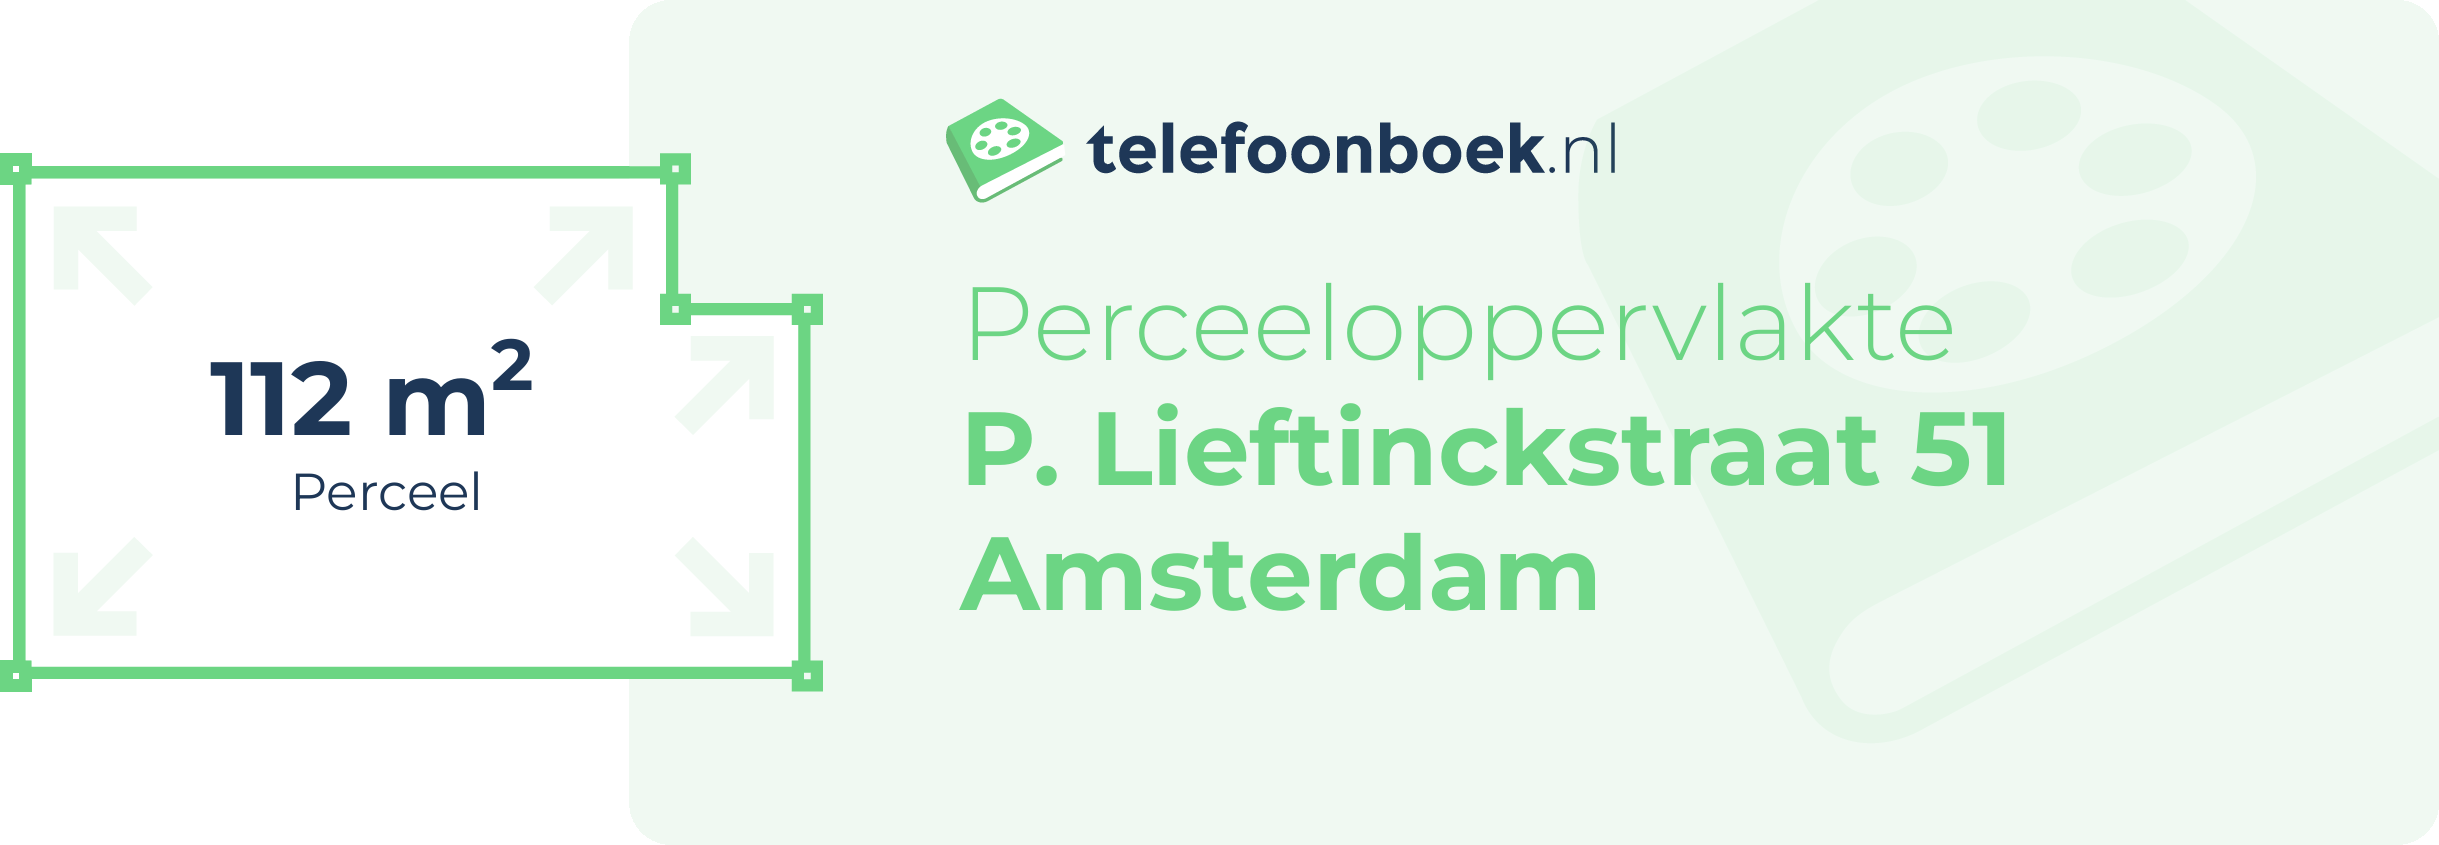 Perceeloppervlakte P. Lieftinckstraat 51 Amsterdam